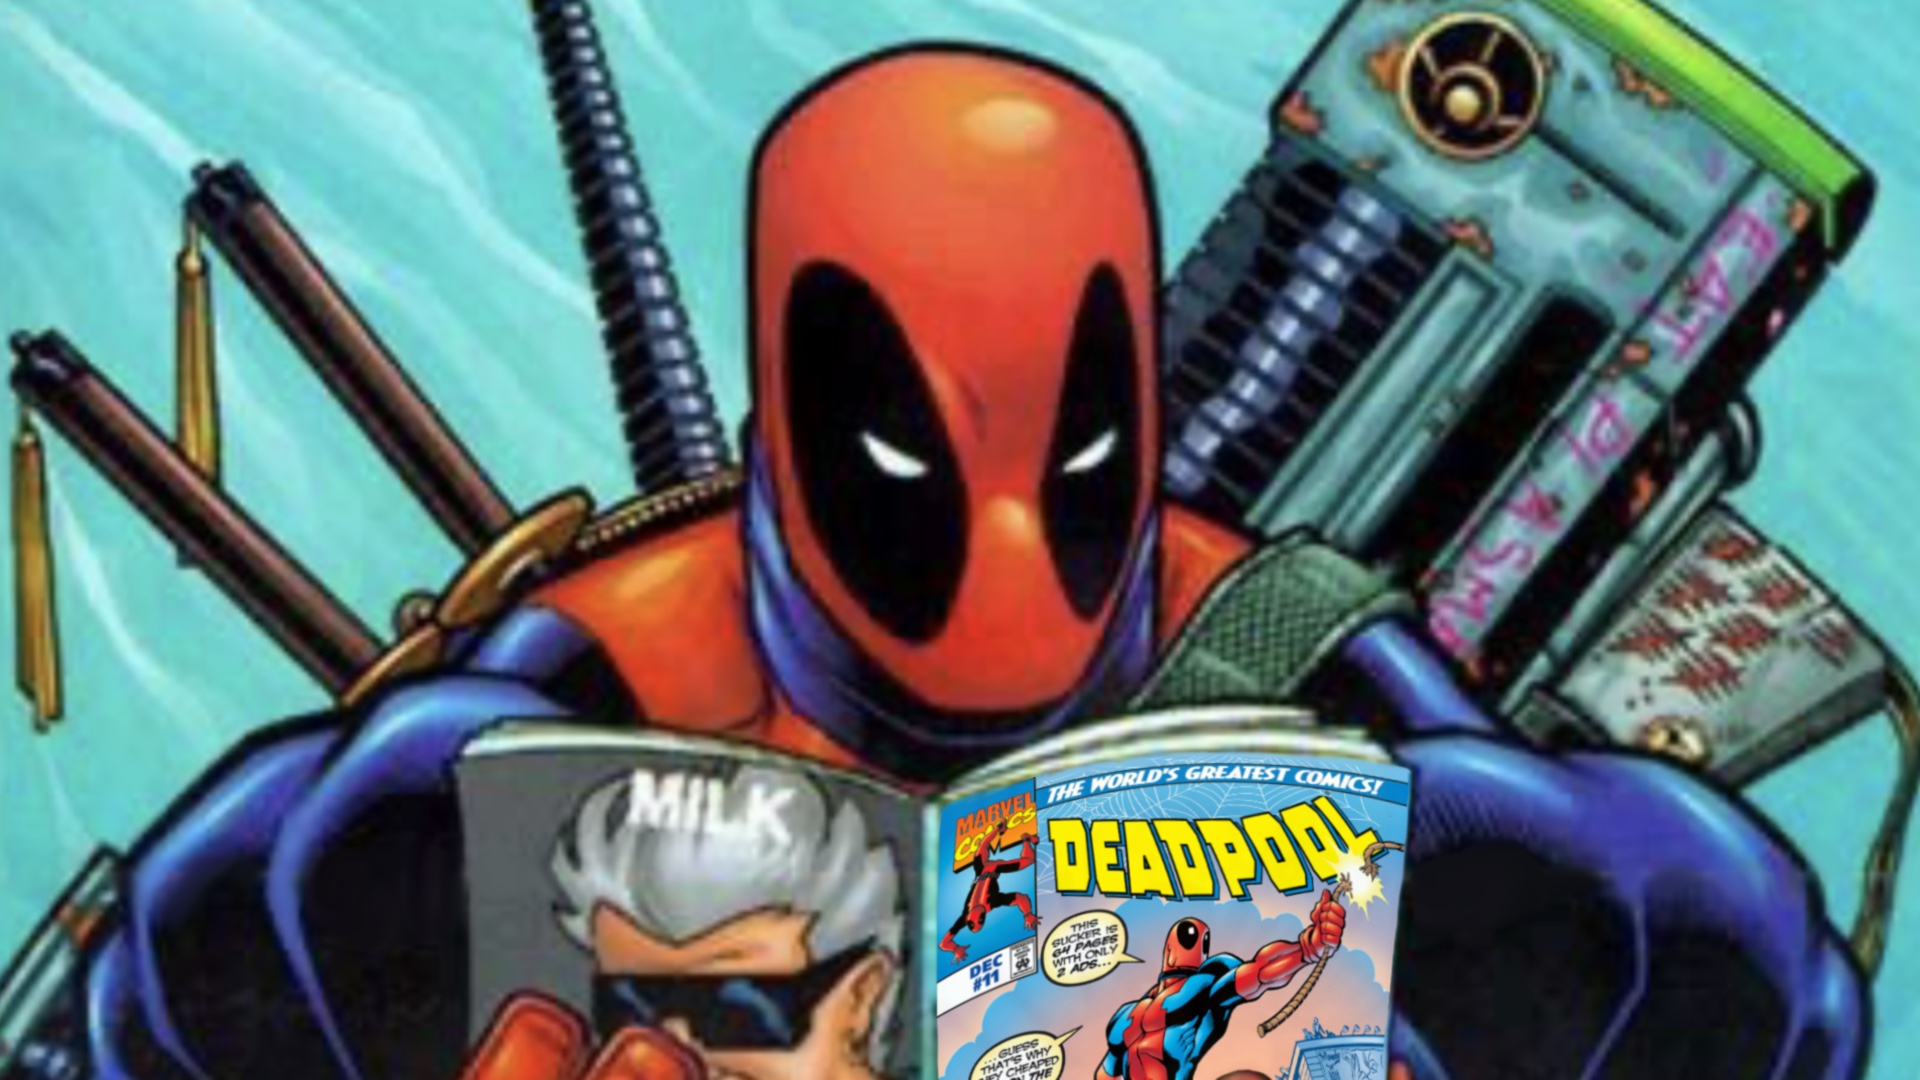 The BEST Deadpool? 